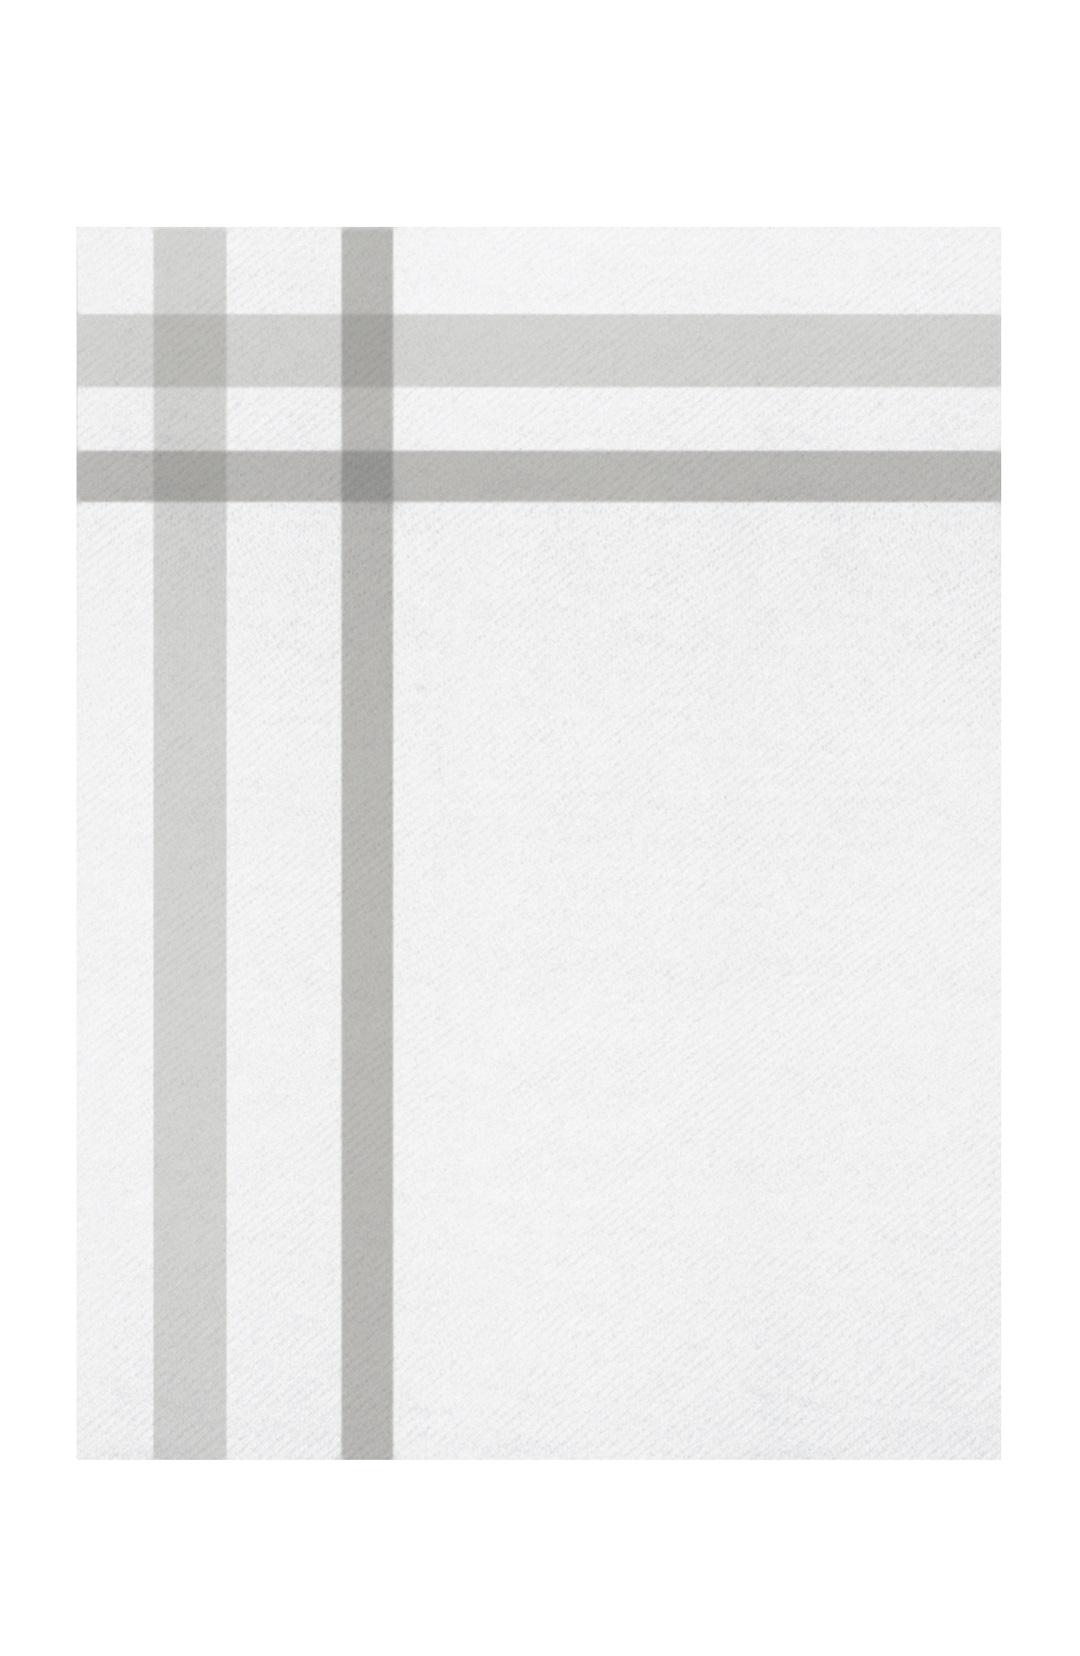 UPPAbaby Knit Blanket - 101x76 cm.